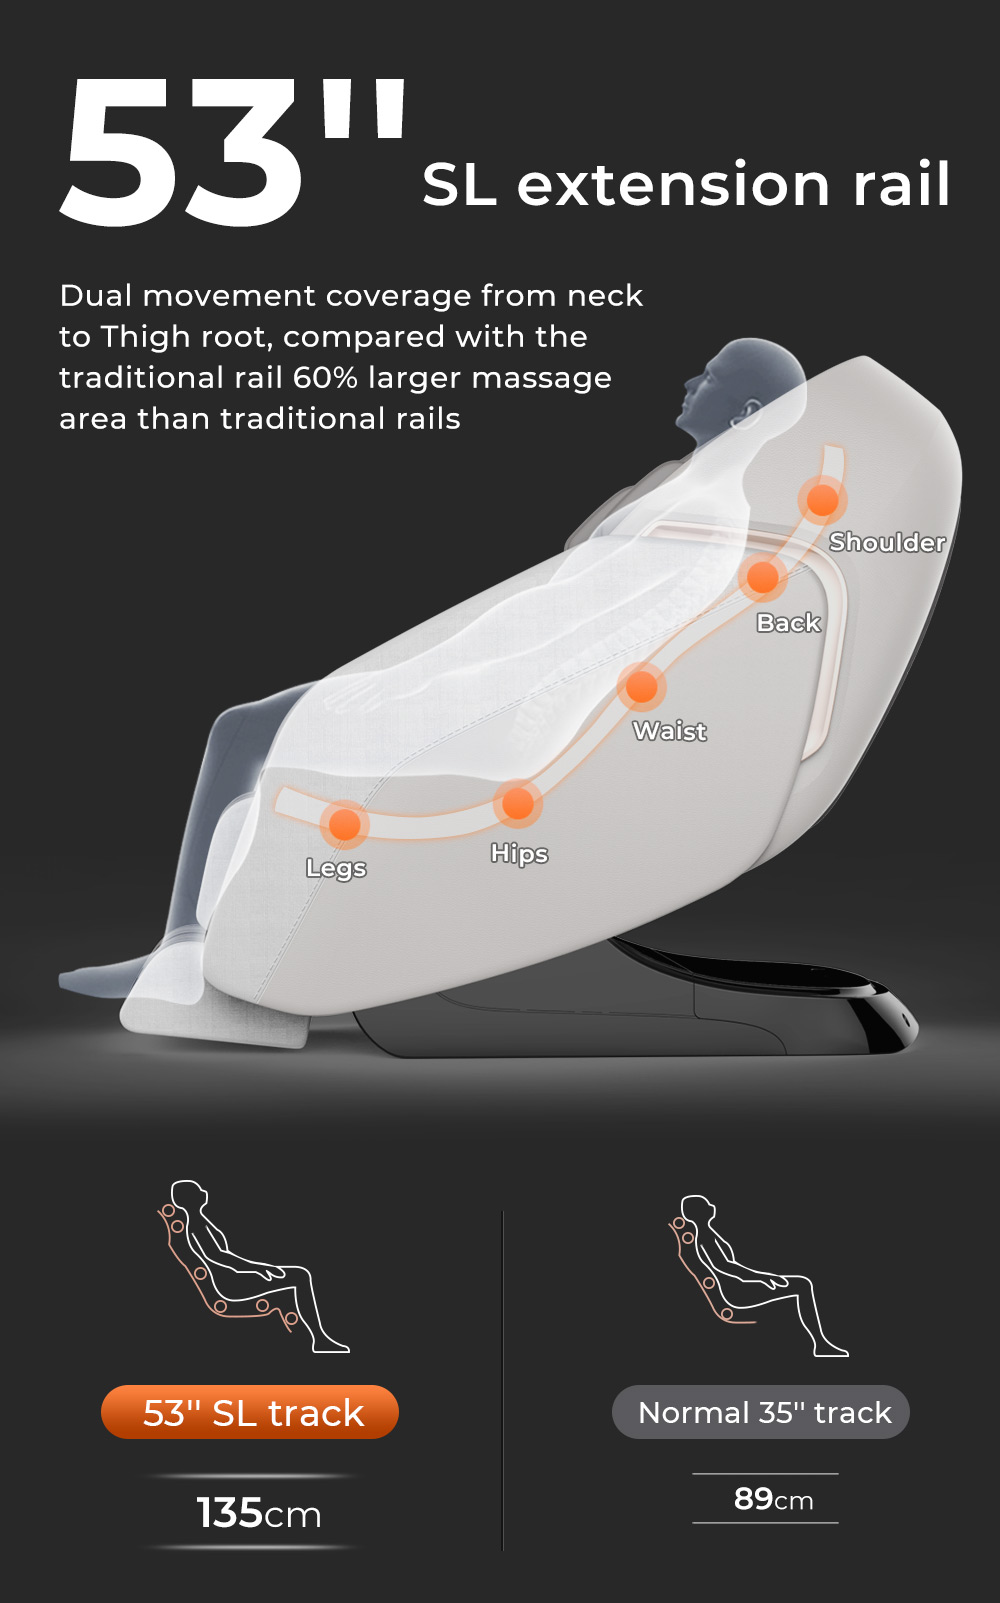 sl track massage chair